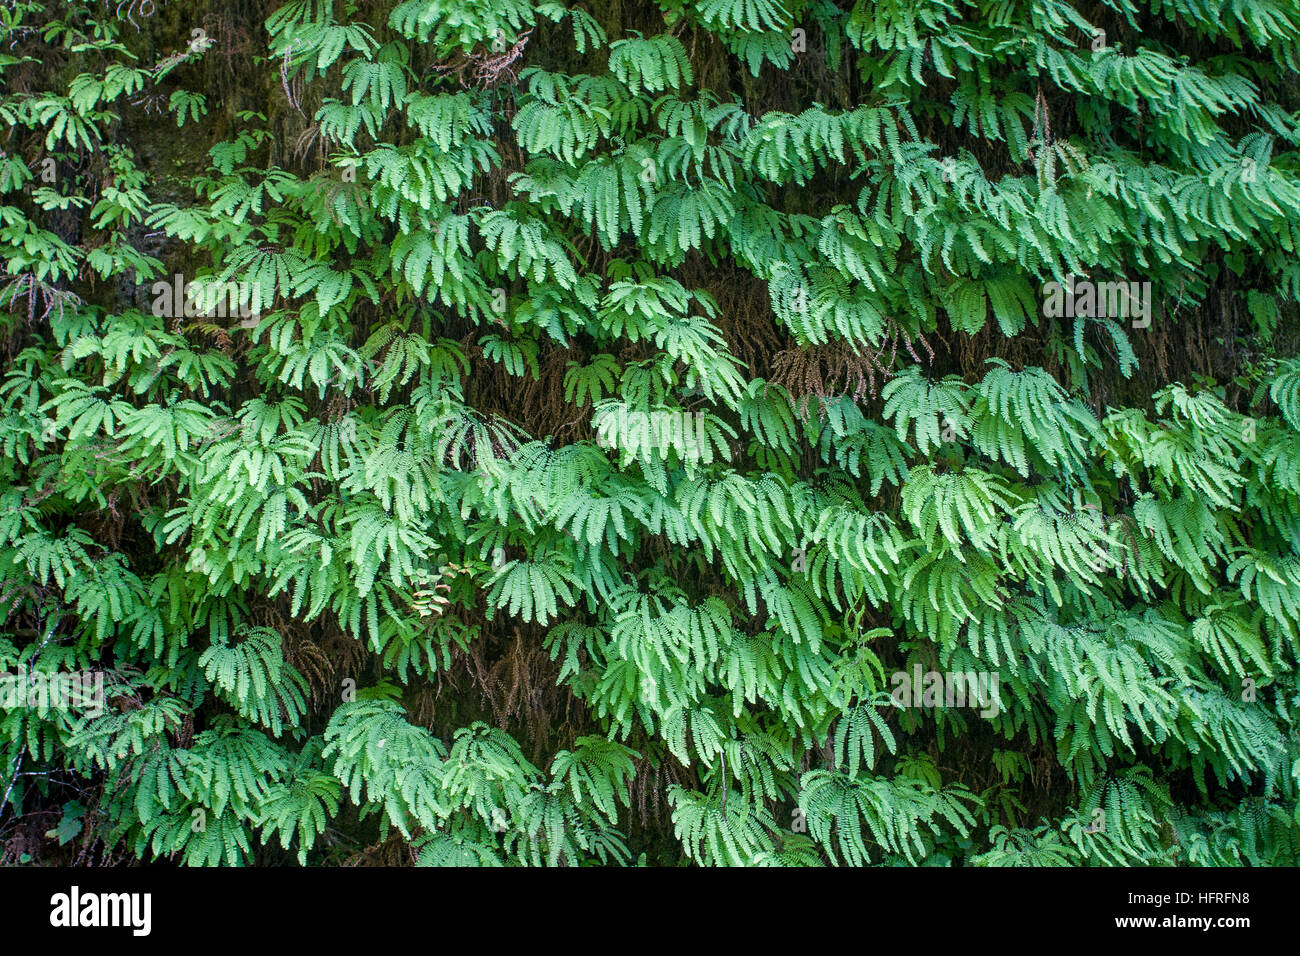 Wall of maidenhair ferns. Stock Photo